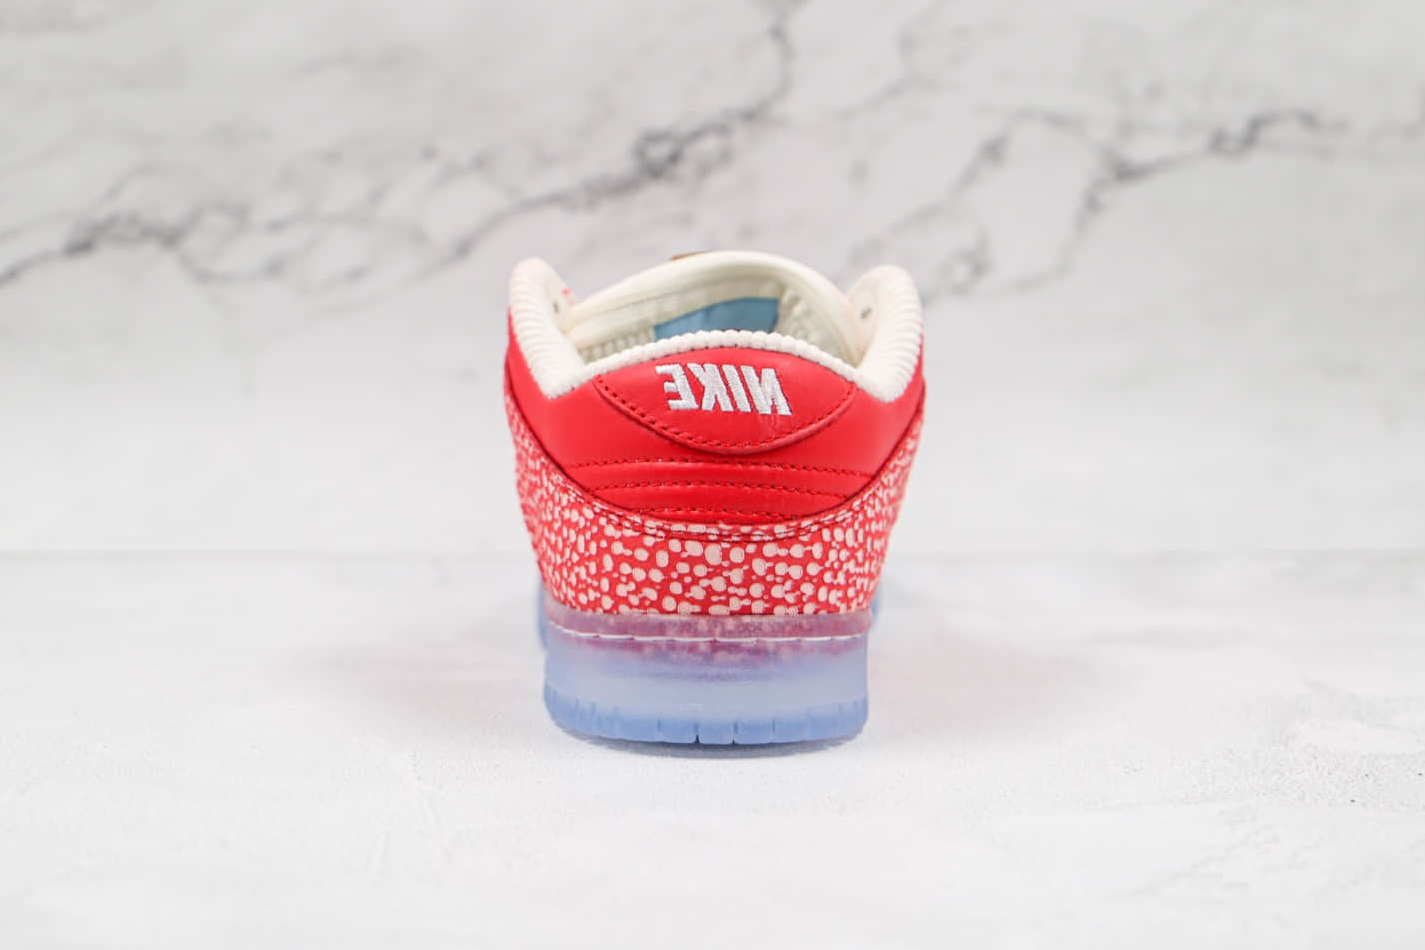 Nike Stingwater x Dunk Low SB 'Magic Mushroom' DH7650-600 - Limited Edition Sneakers